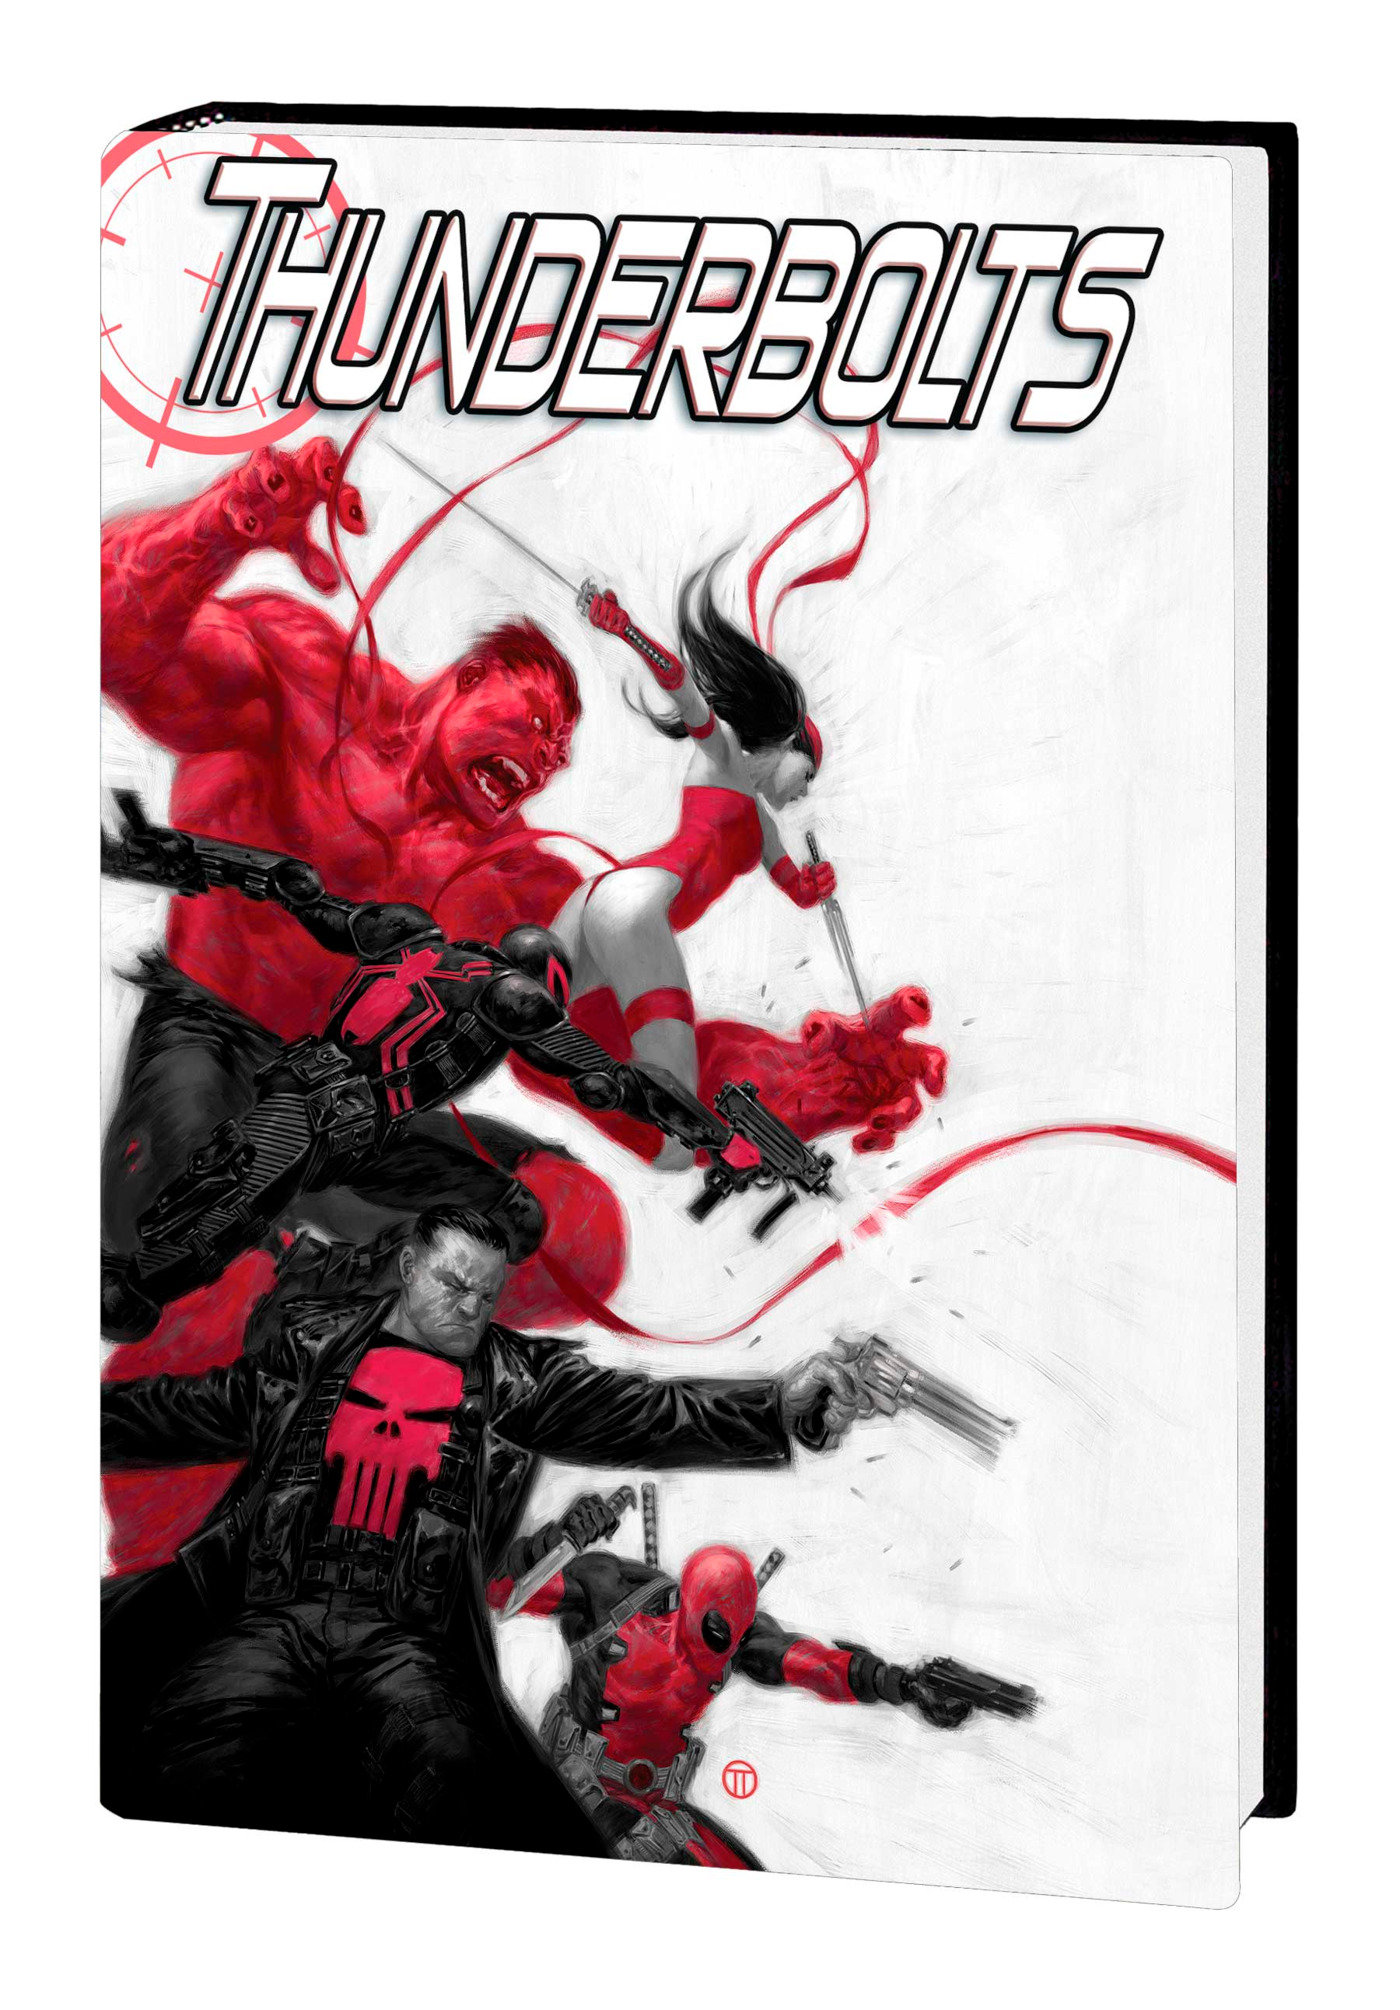 Thunderbolts Red Omnibus Hardcover Graphic Novel Volume 1 (Direct Market Variant)